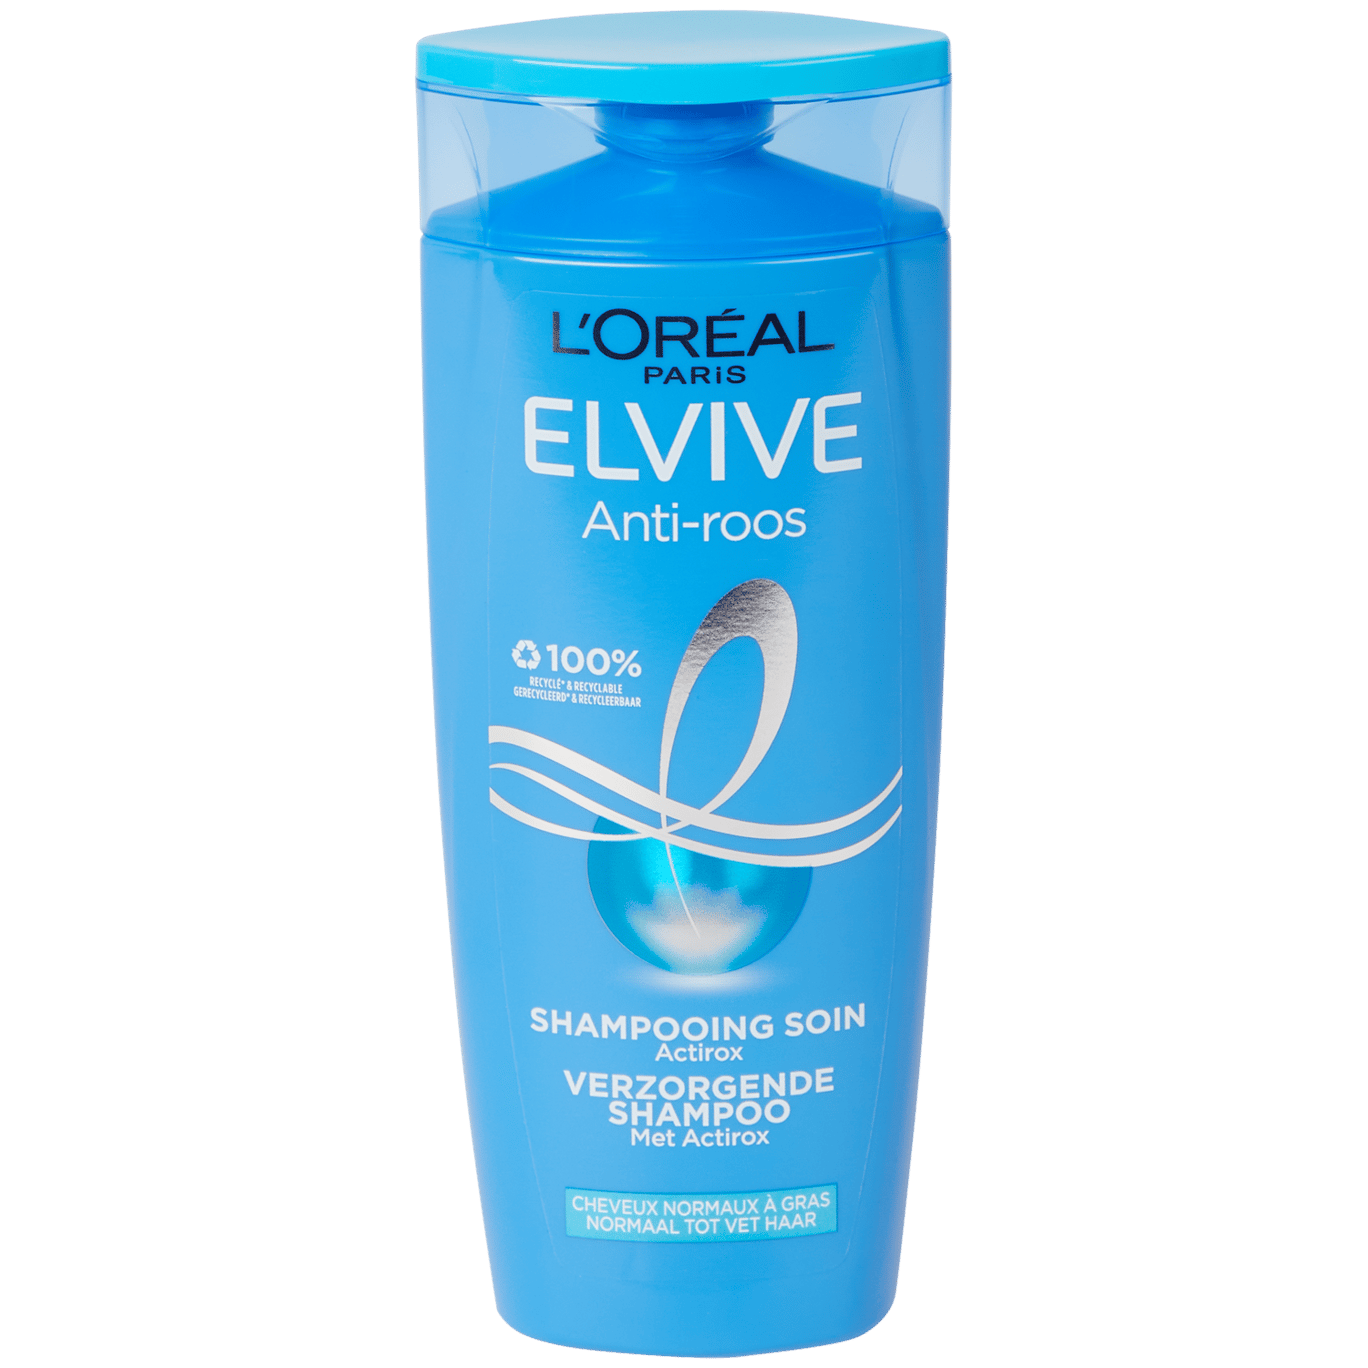 Elvive shampoo Anti-roos | Action.com